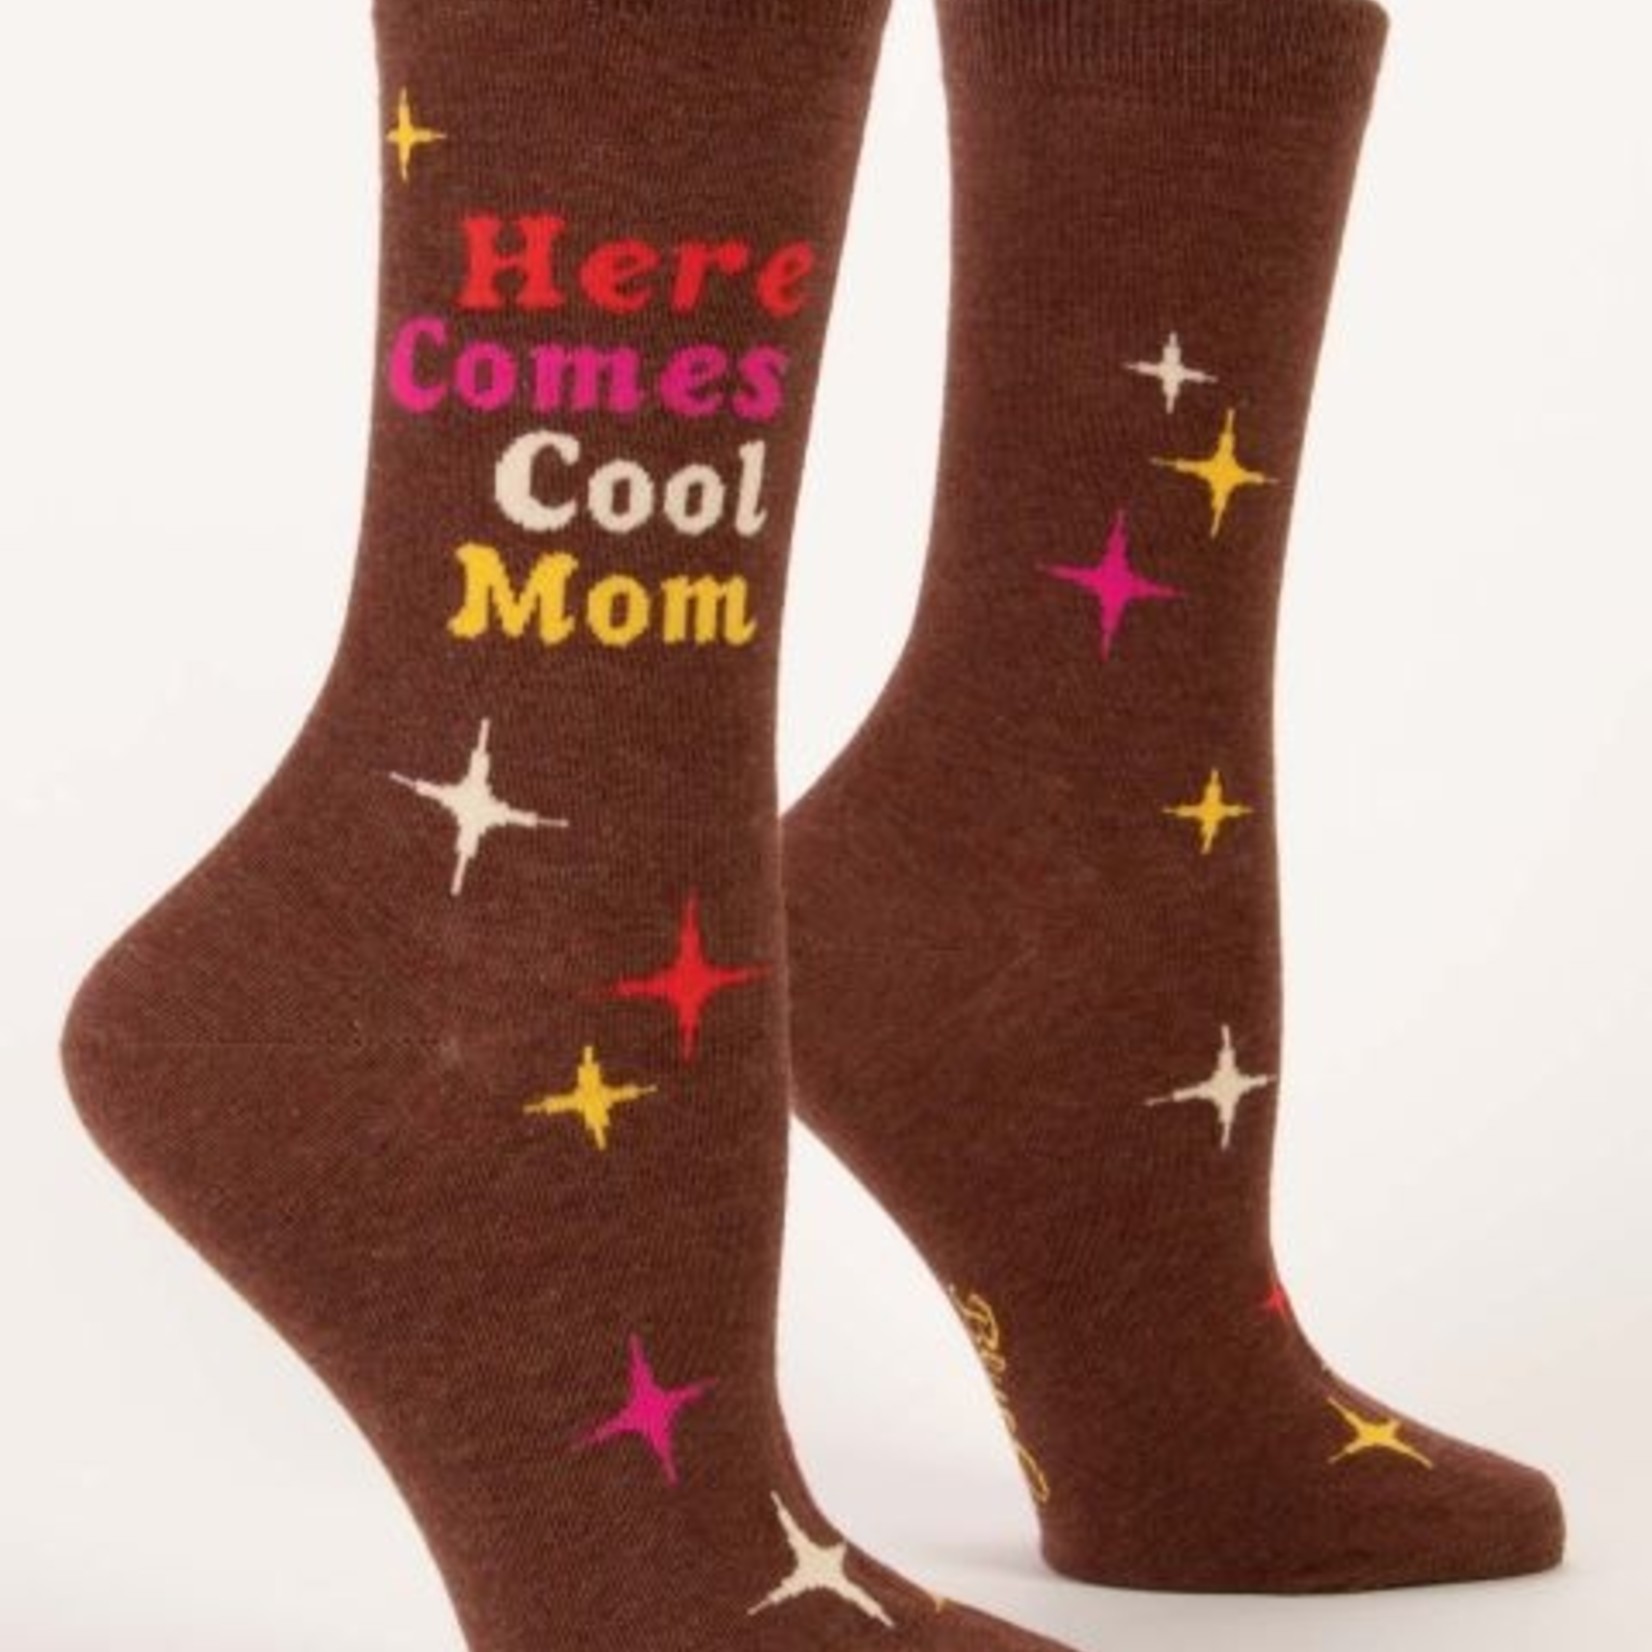 Blue Q Blue Q - Crew Socks - Here Comes Cool Mom